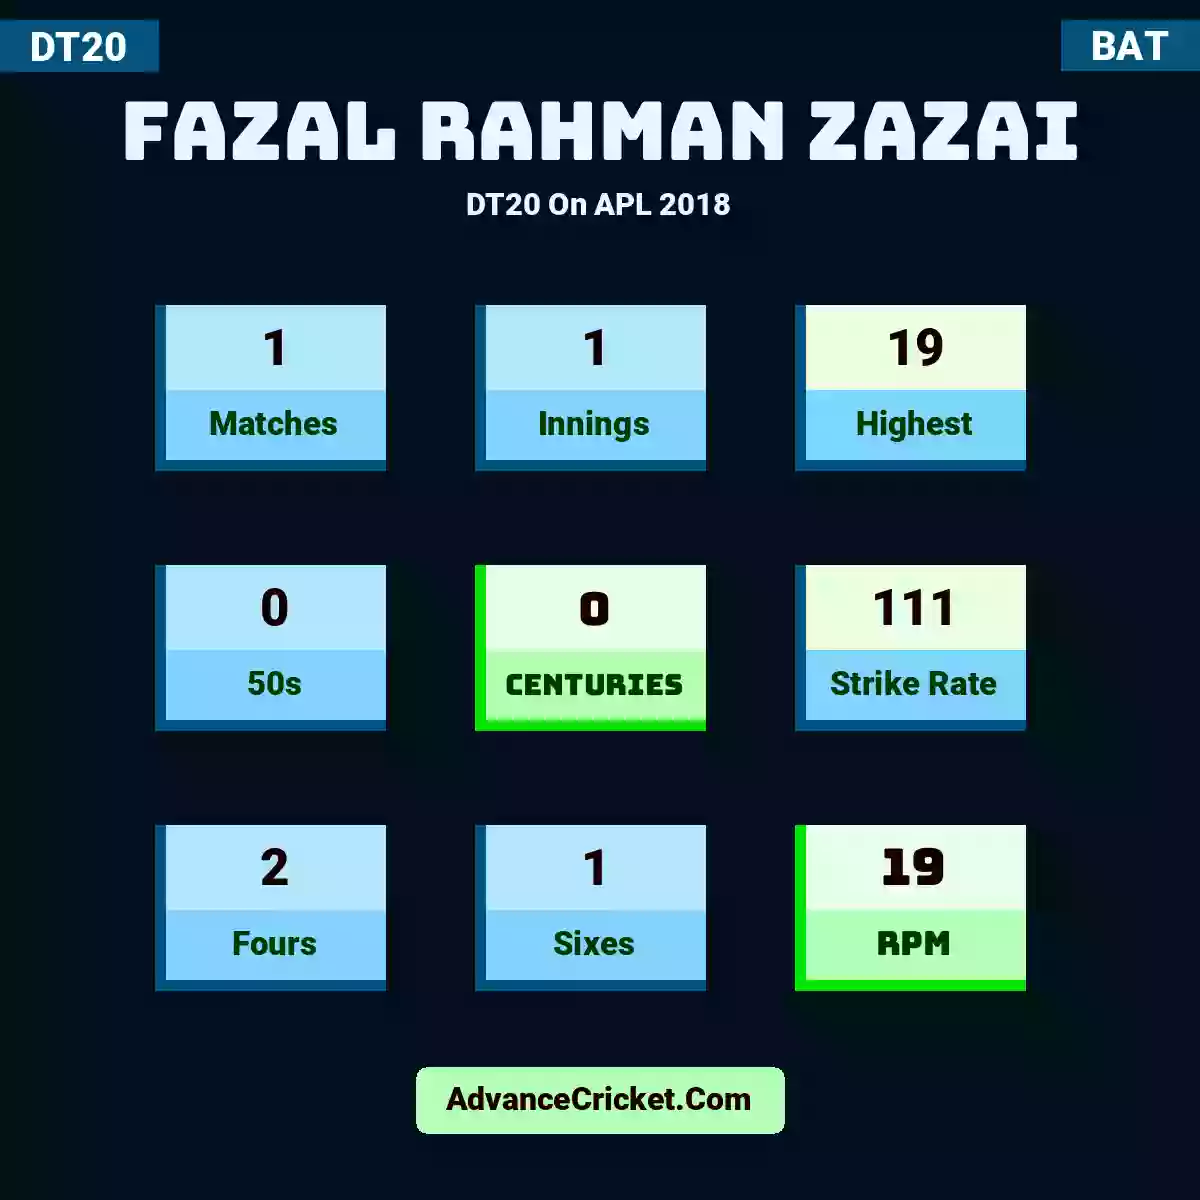 Fazal Rahman Zazai DT20  On APL 2018, Fazal Rahman Zazai played 1 matches, scored 19 runs as highest, 0 half-centuries, and 0 centuries, with a strike rate of 111. F.Zazai hit 2 fours and 1 sixes, with an RPM of 19.